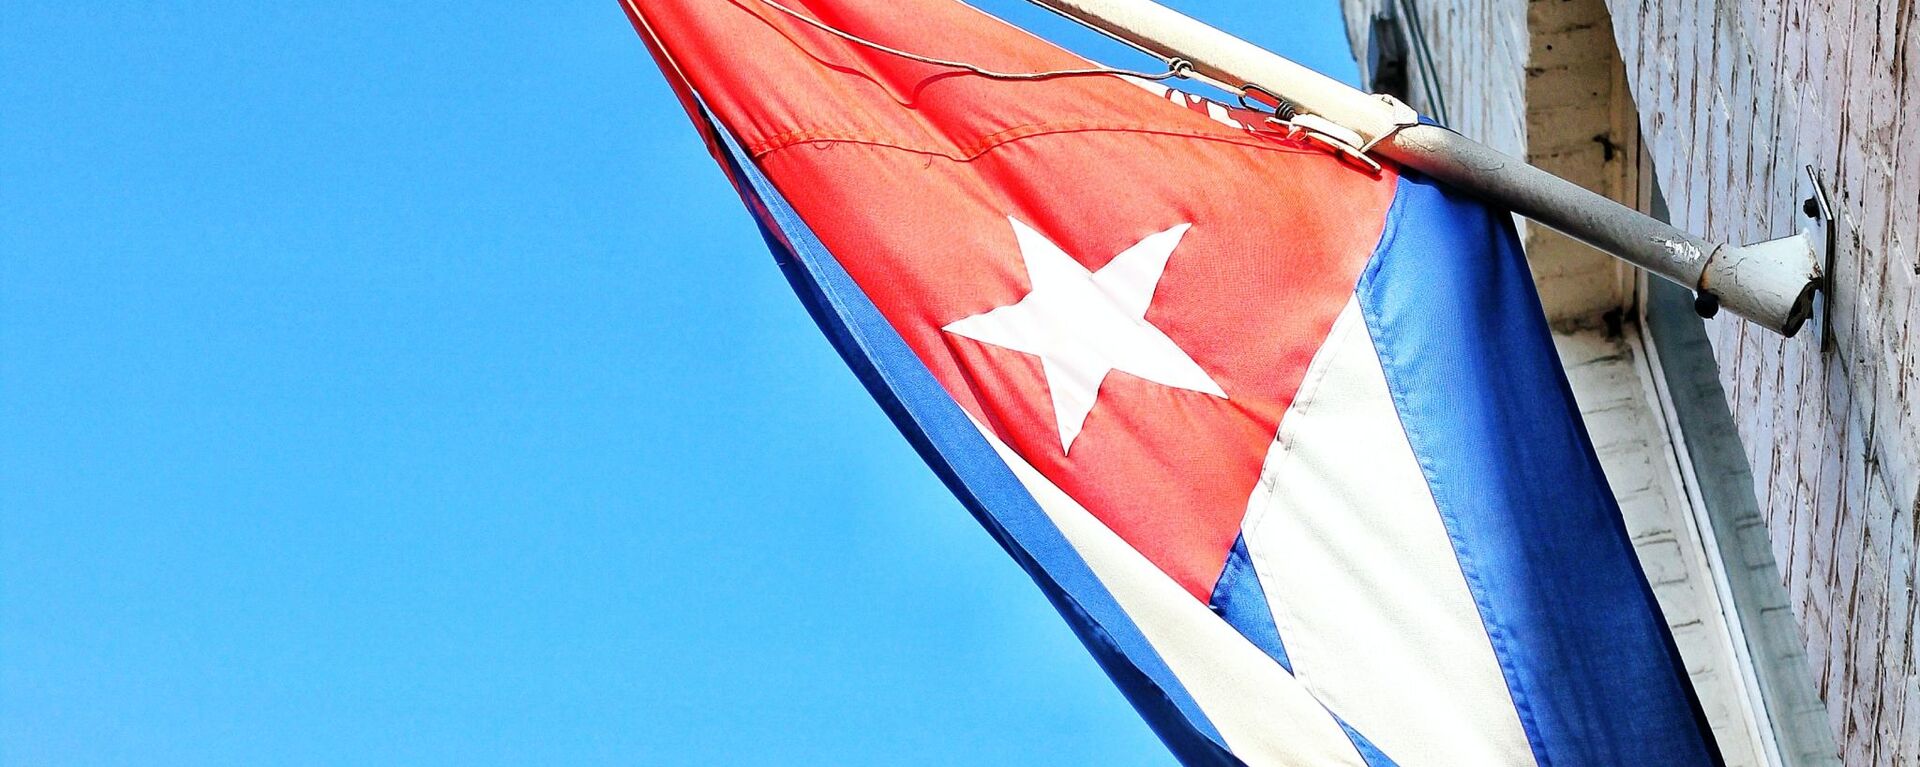 La bandera de Cuba - Sputnik Mundo, 1920, 15.04.2021